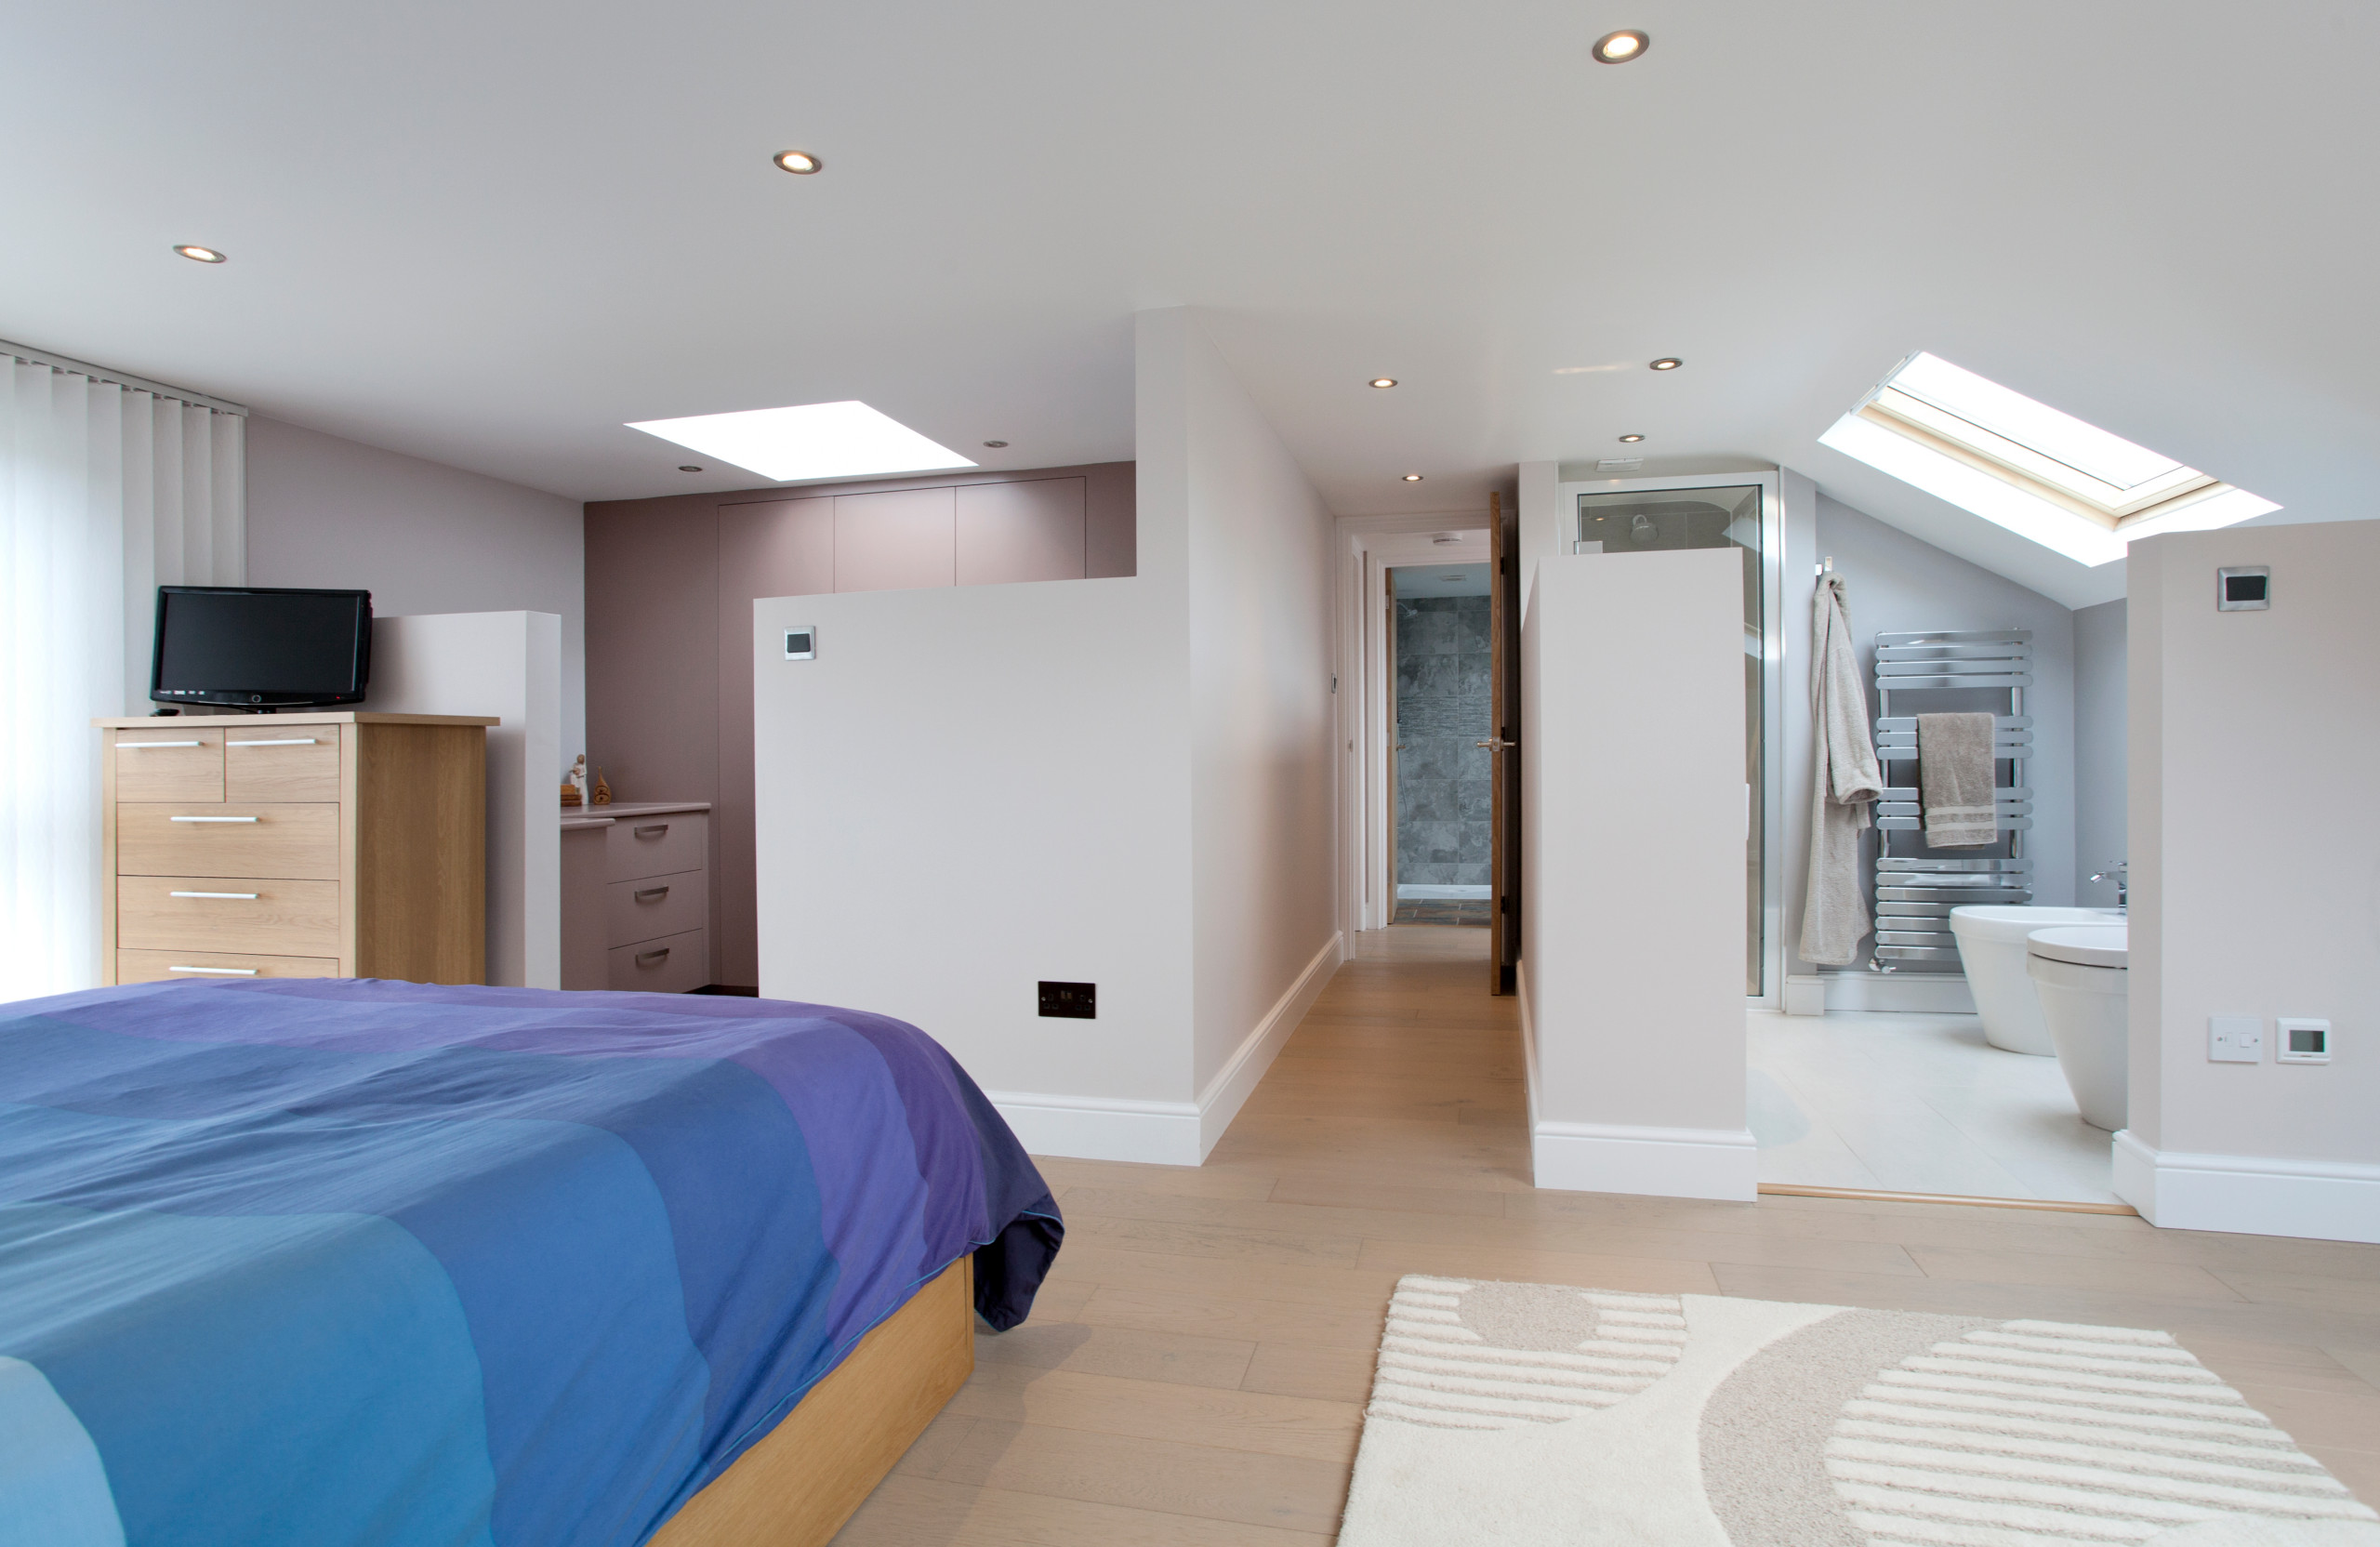 Surrey Rear Dormer Loft Conversion - 2 bedrooms, 2 bathrooms & dressing  room - Contemporary - Bedroom - Surrey - by A1 Lofts and Extensions | Houzz